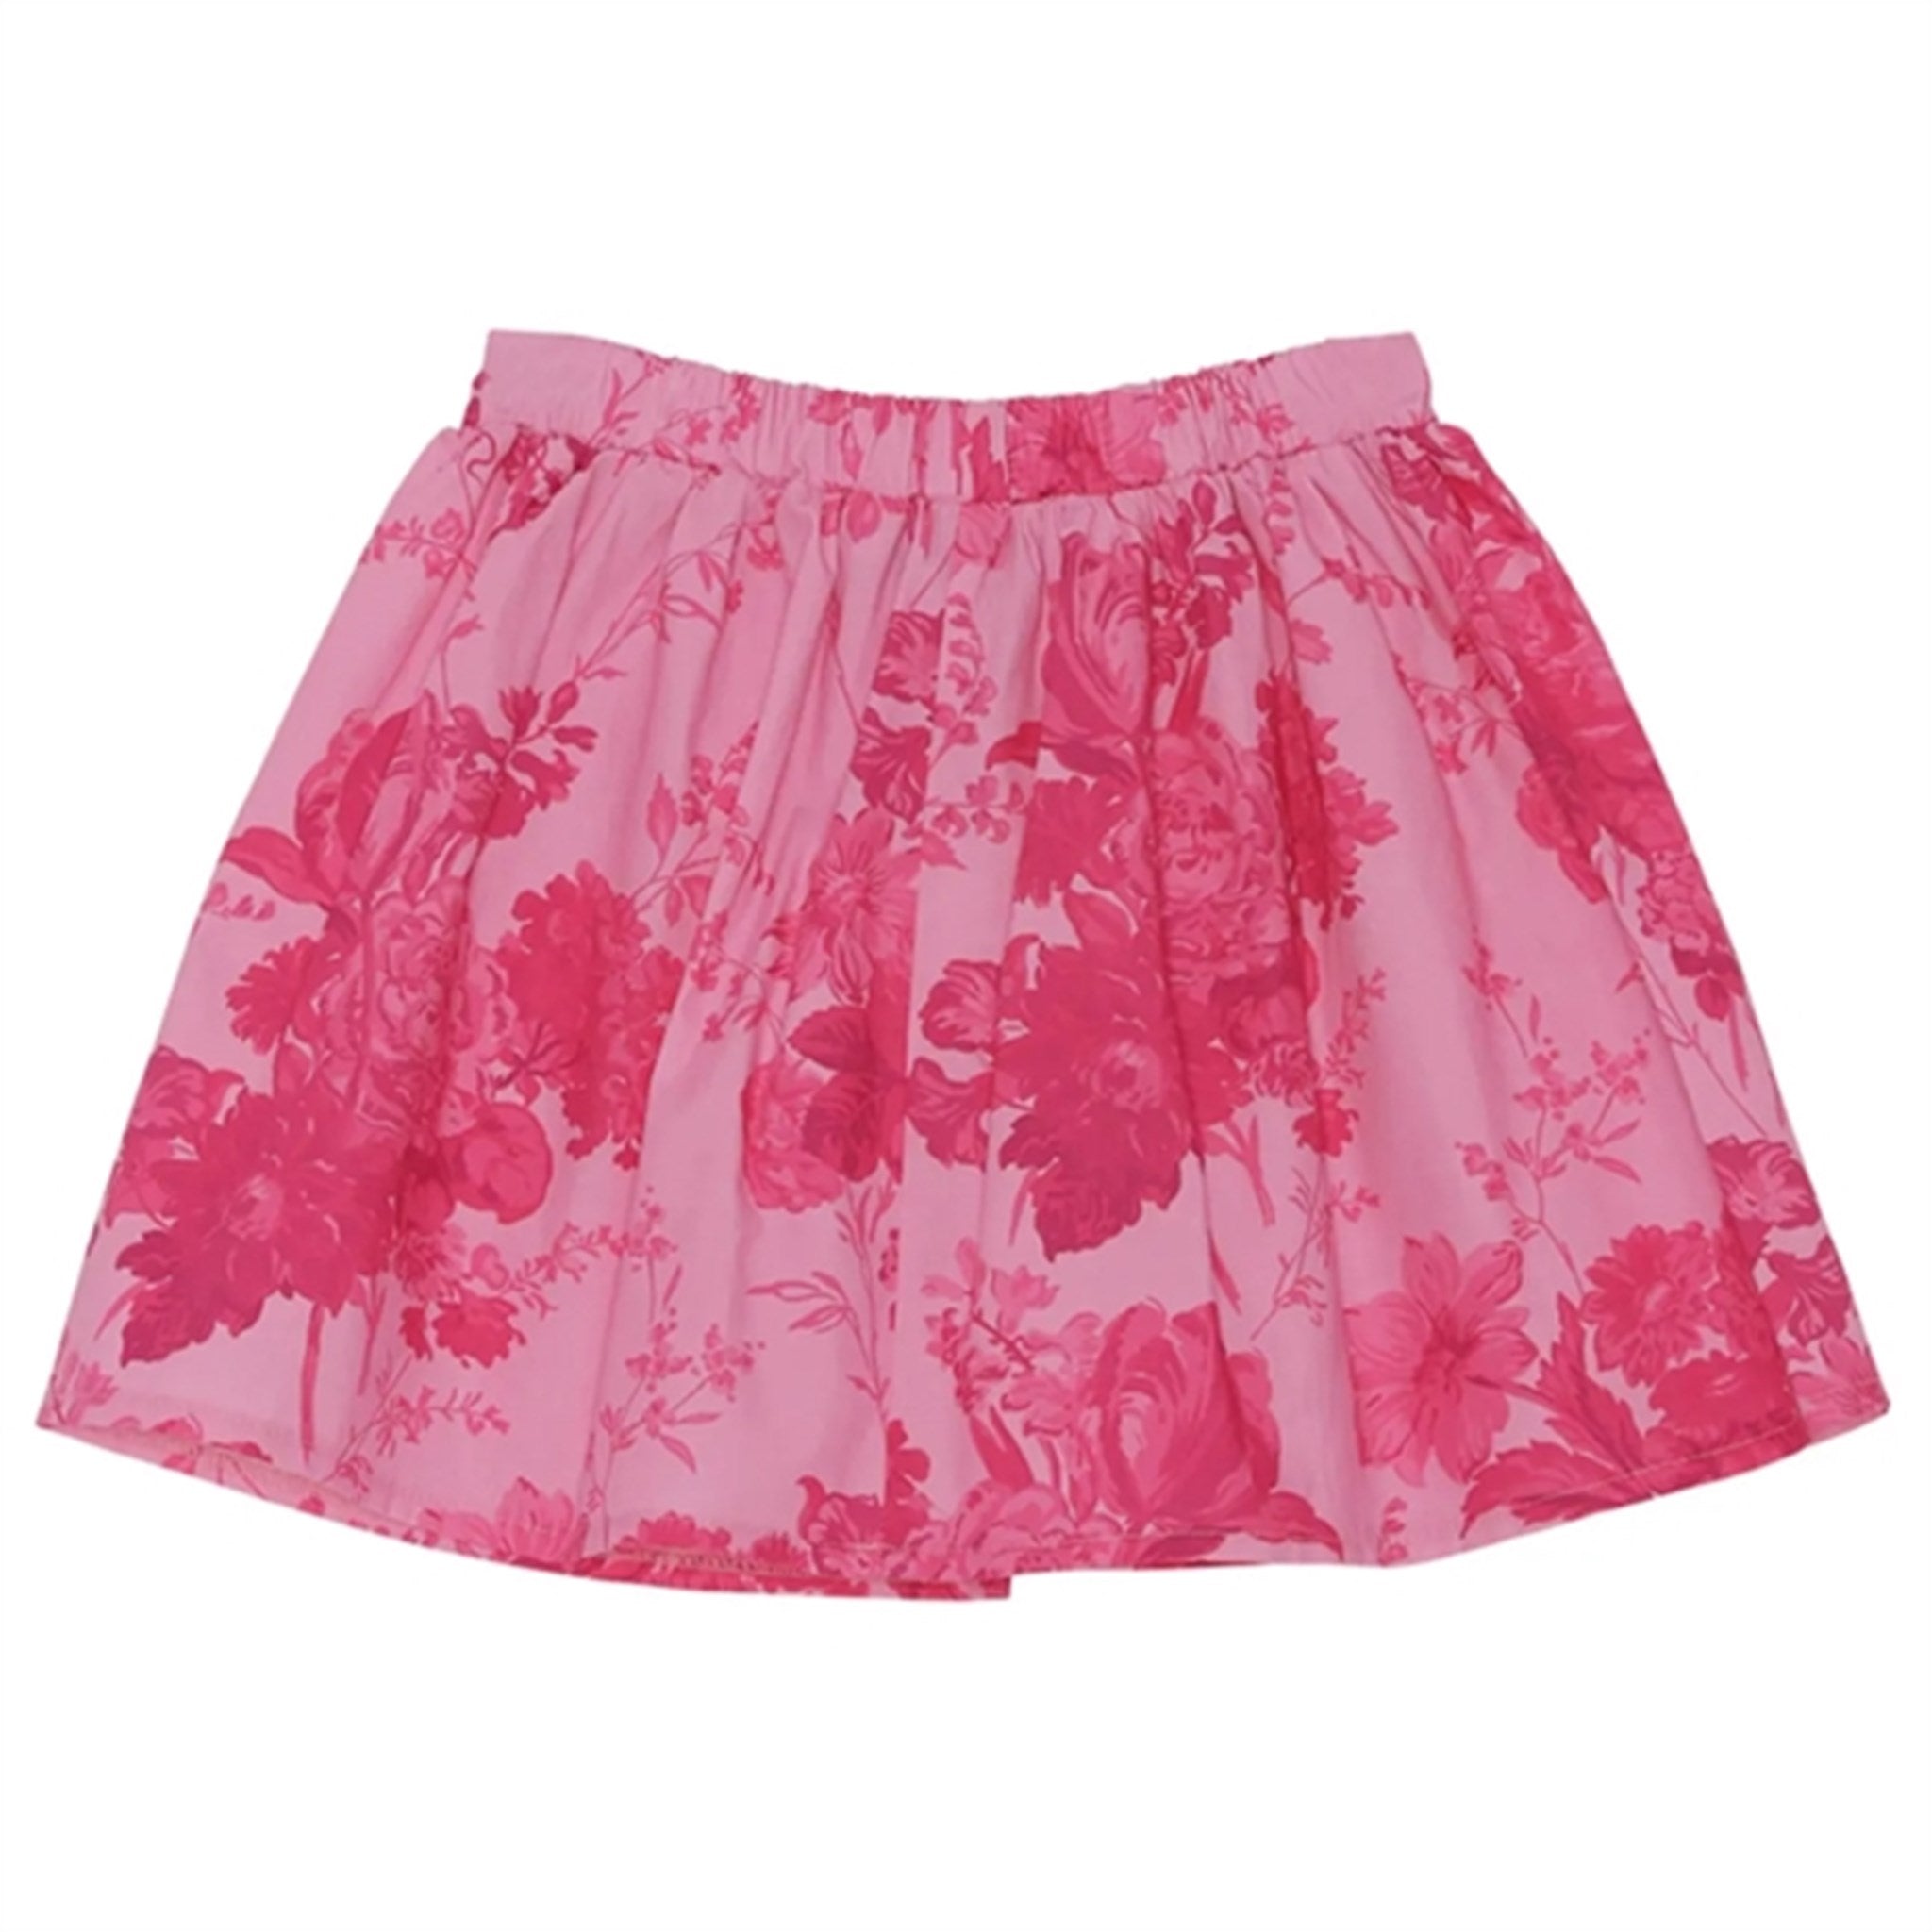 Christina Rohde 202 Skirt Pink Floral